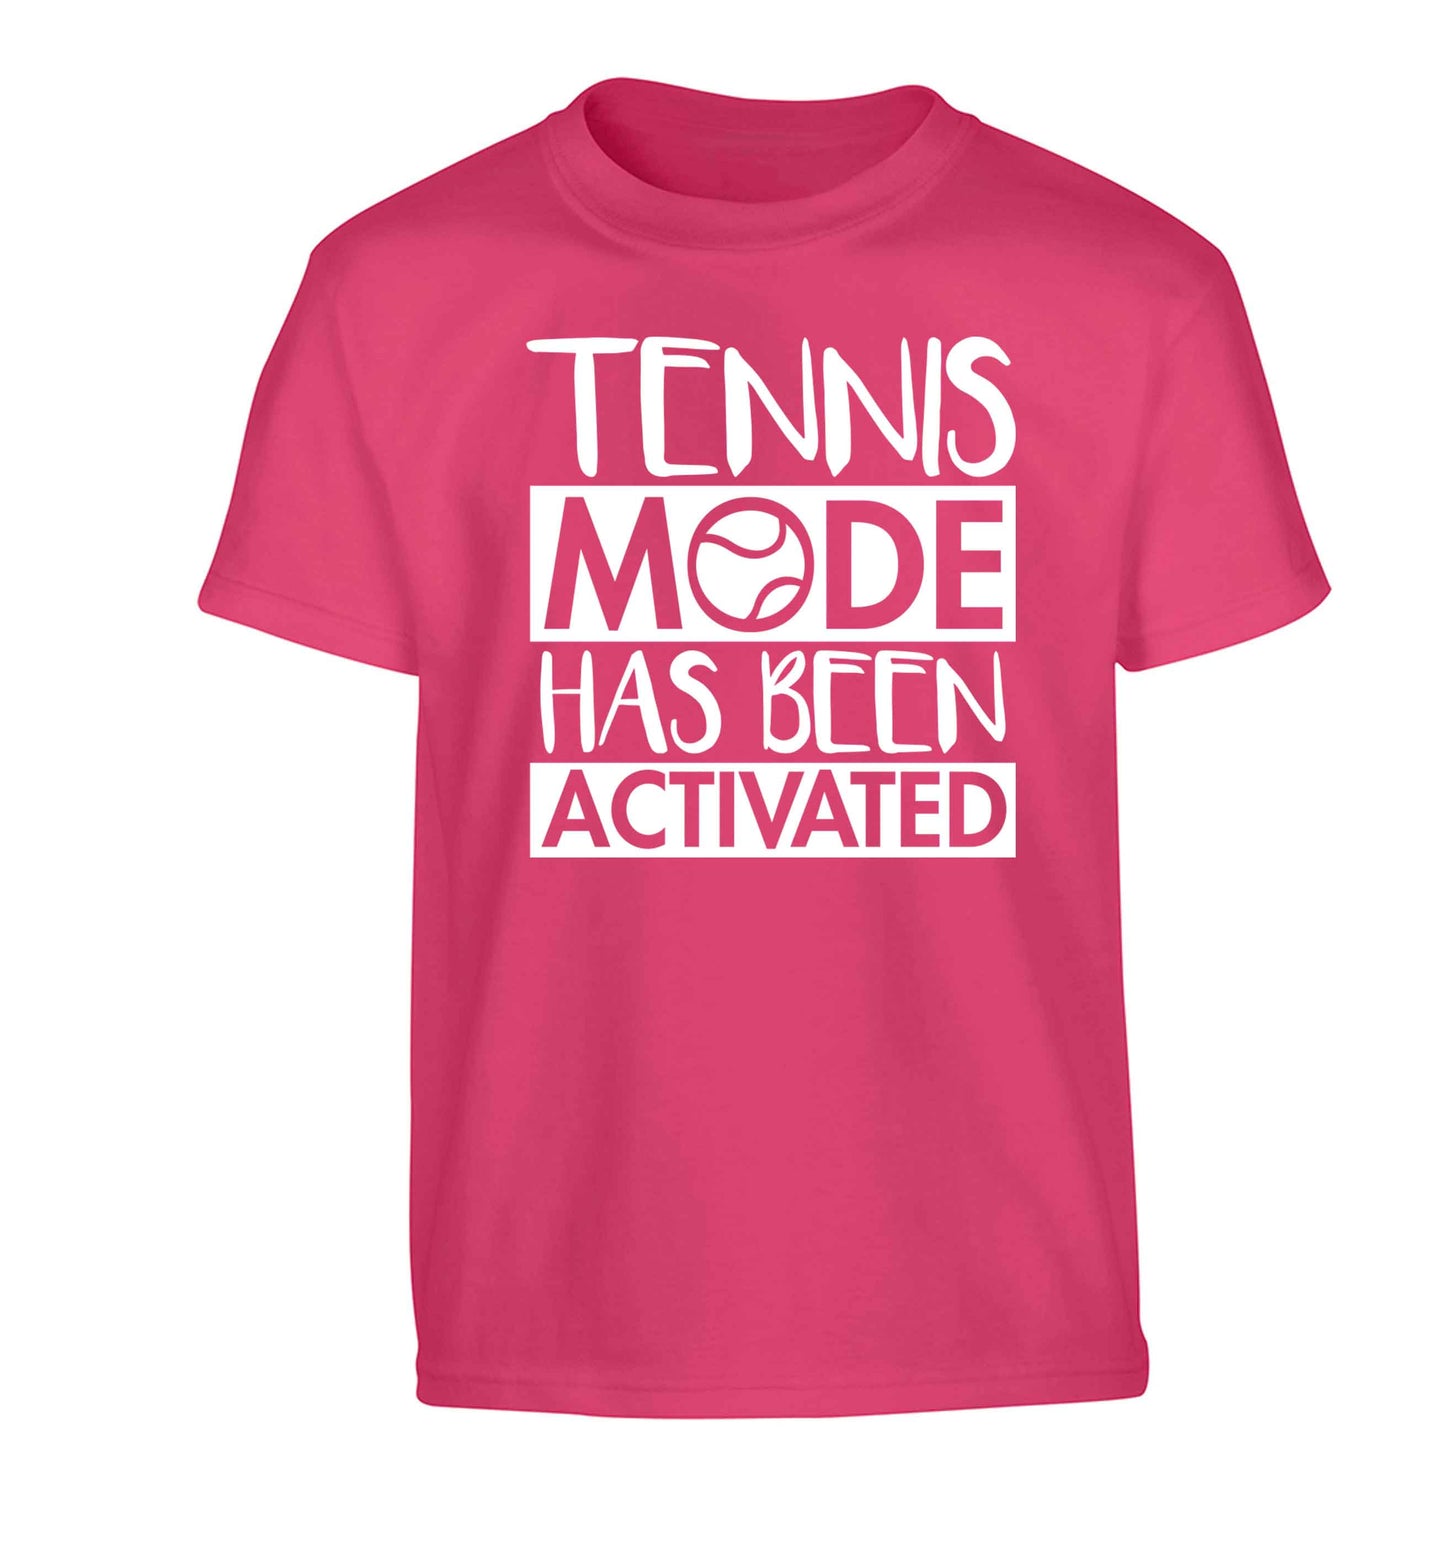 Tennis mode has been activated Children's pink Tshirt 12-13 Years